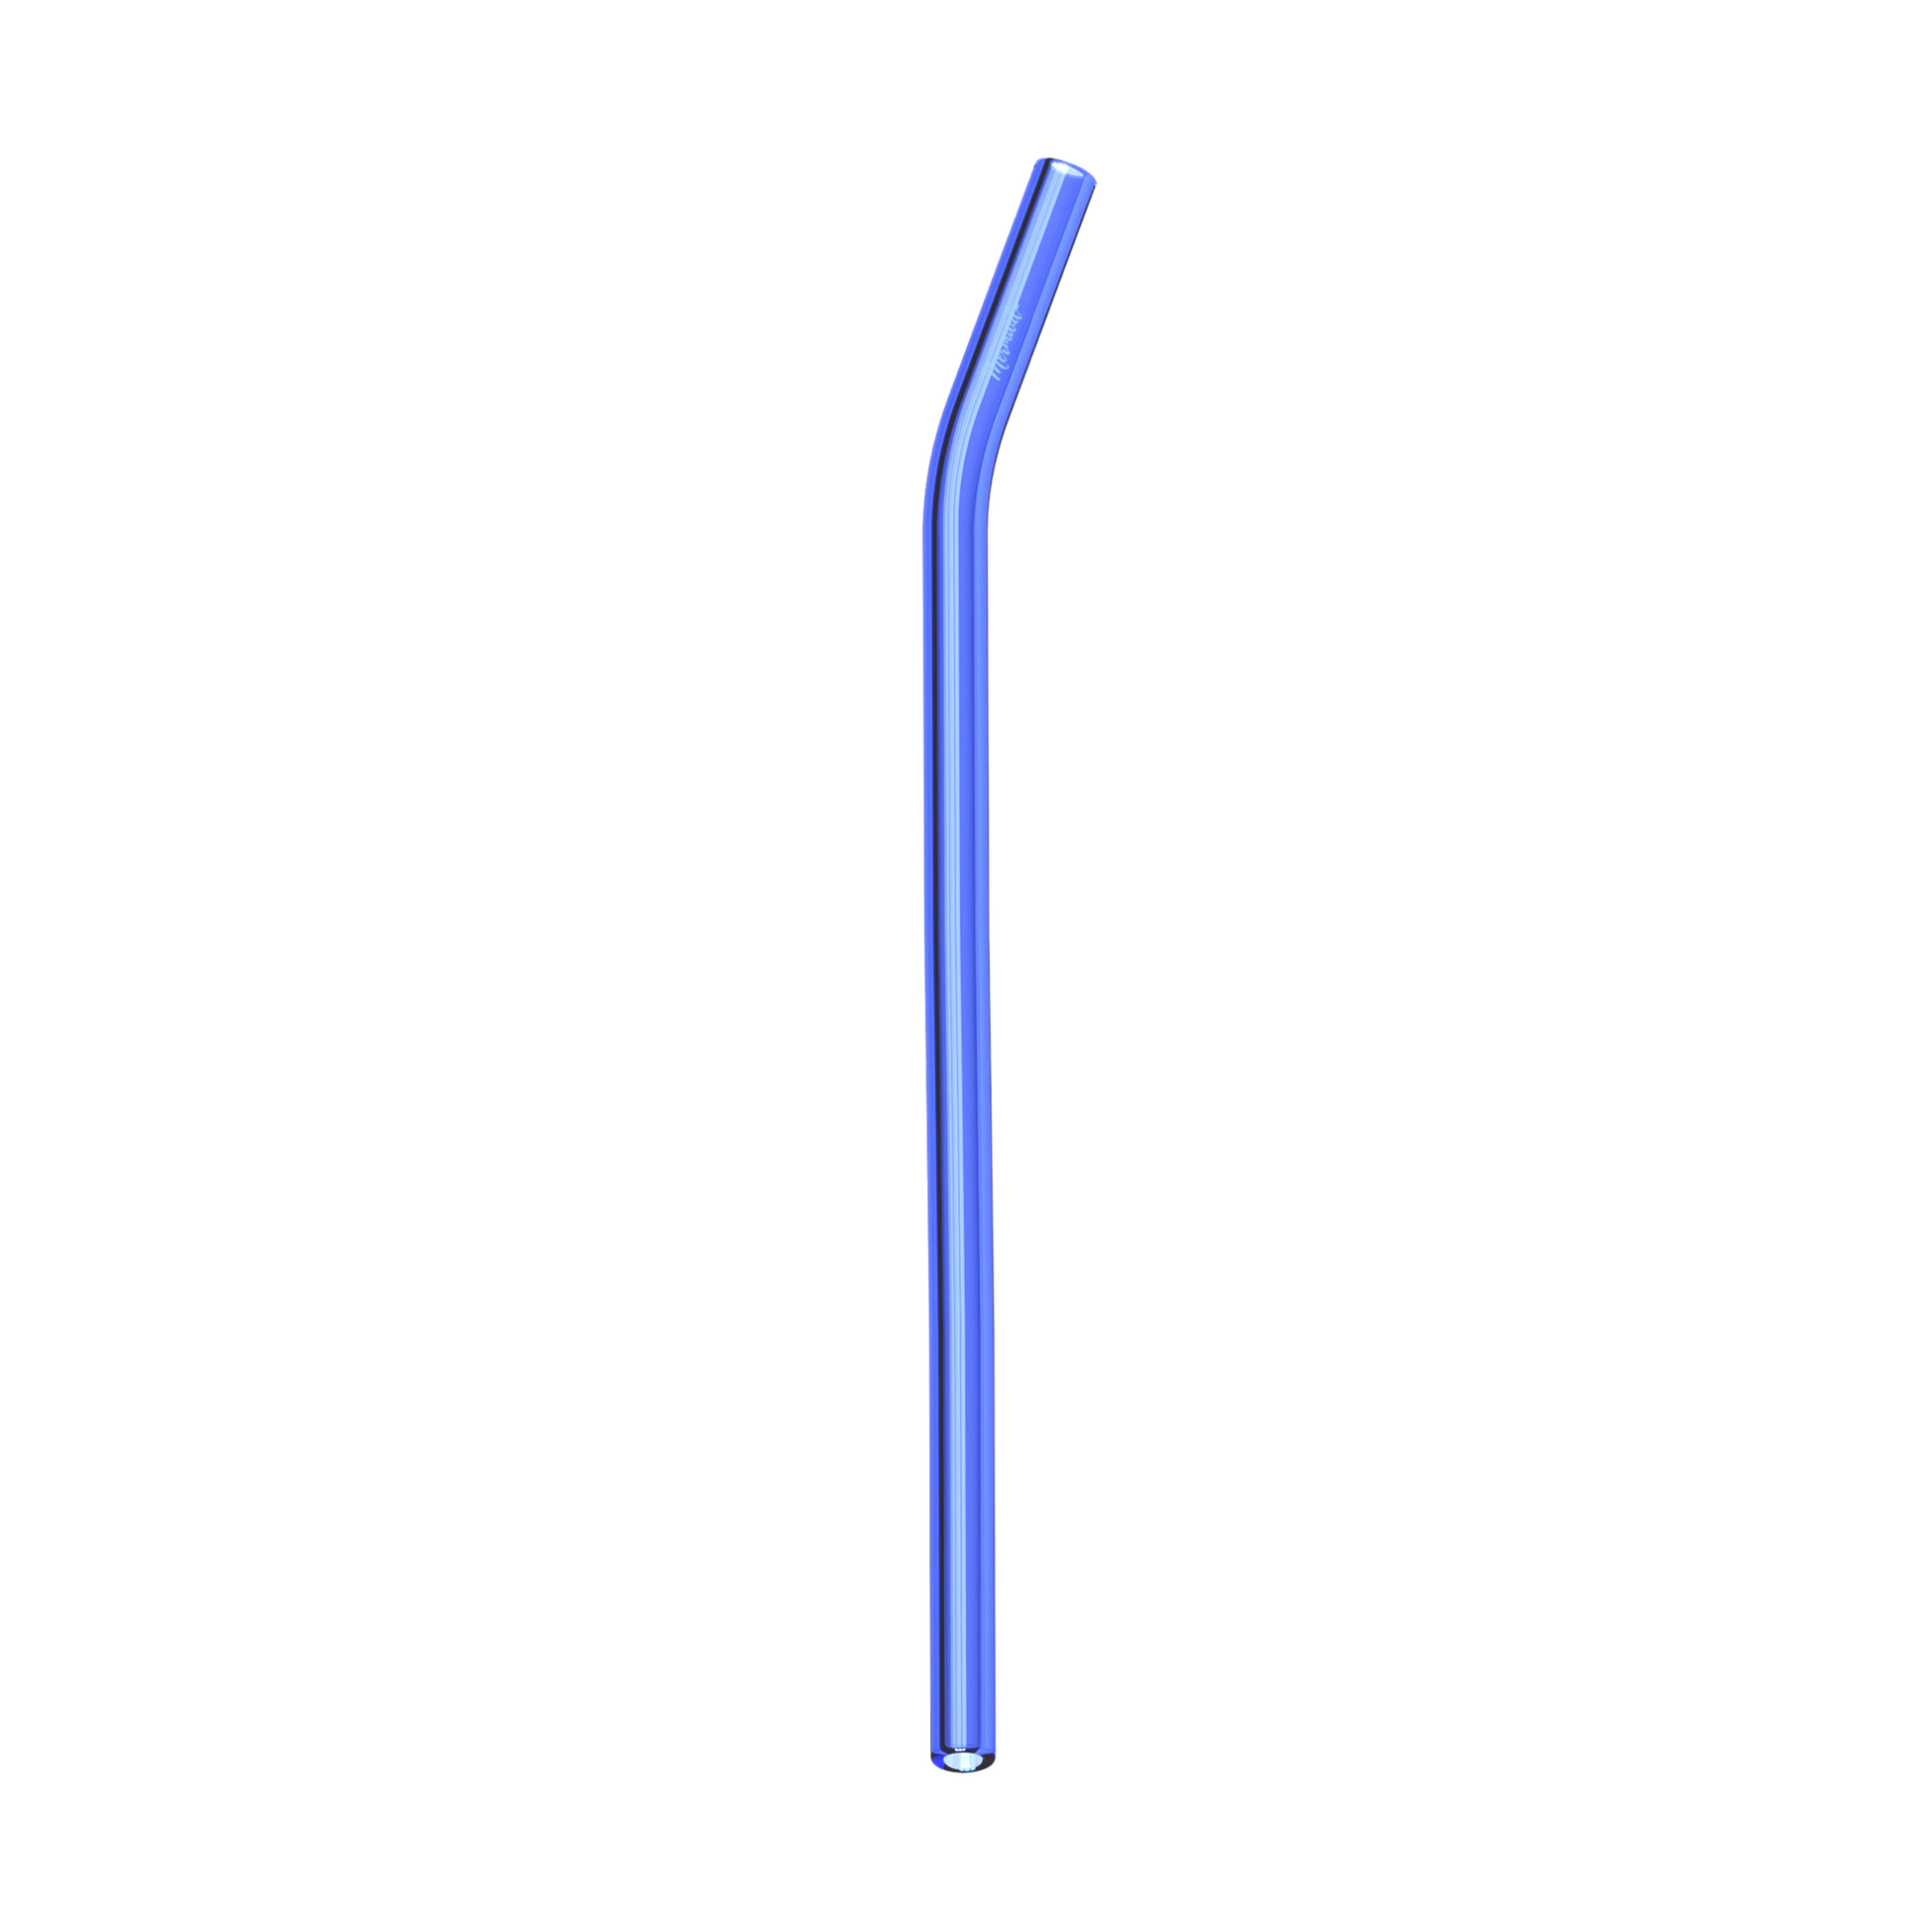 Glass Straws, Mermaid Straw, Reusable Straw, blue glass curved single